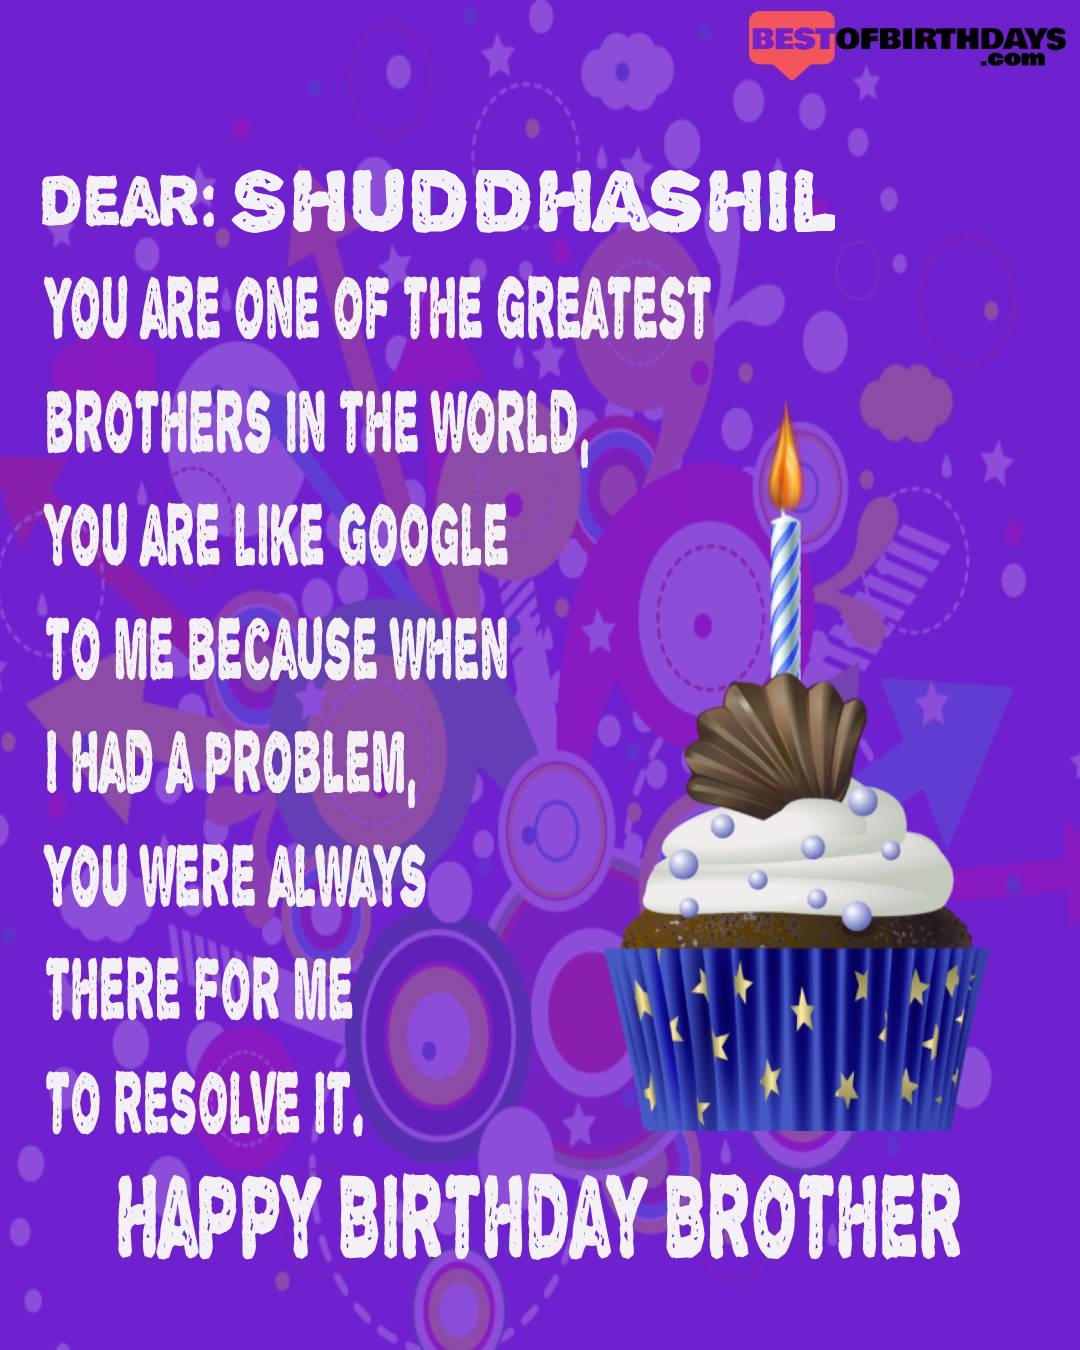 Happy birthday shuddhashil bhai brother bro